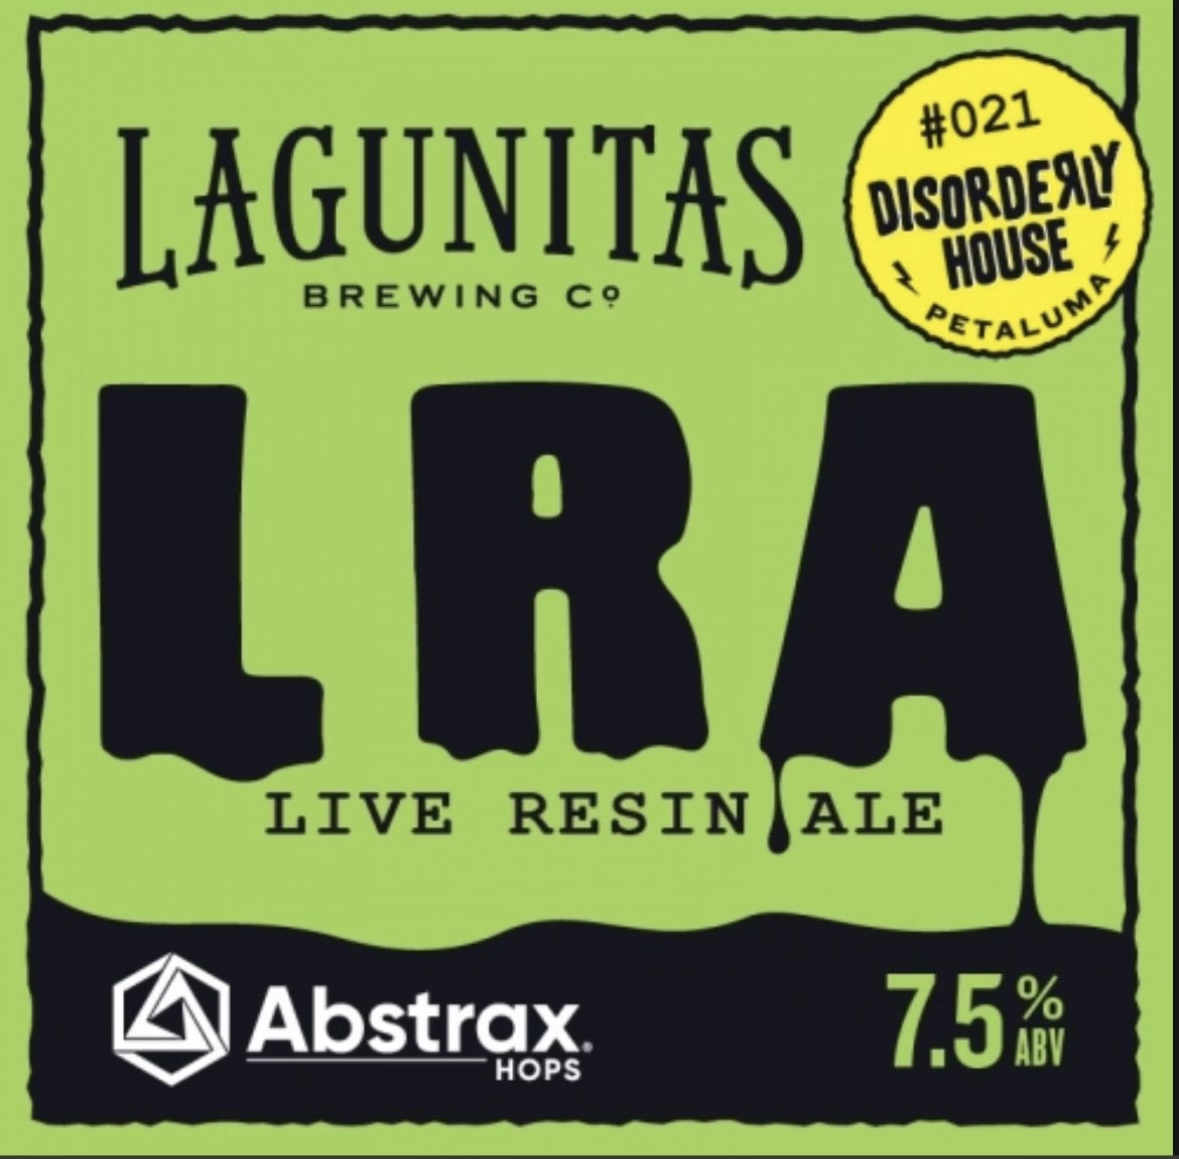 ABSTRAX - Lagunitas Live Resin Ale (LRA)